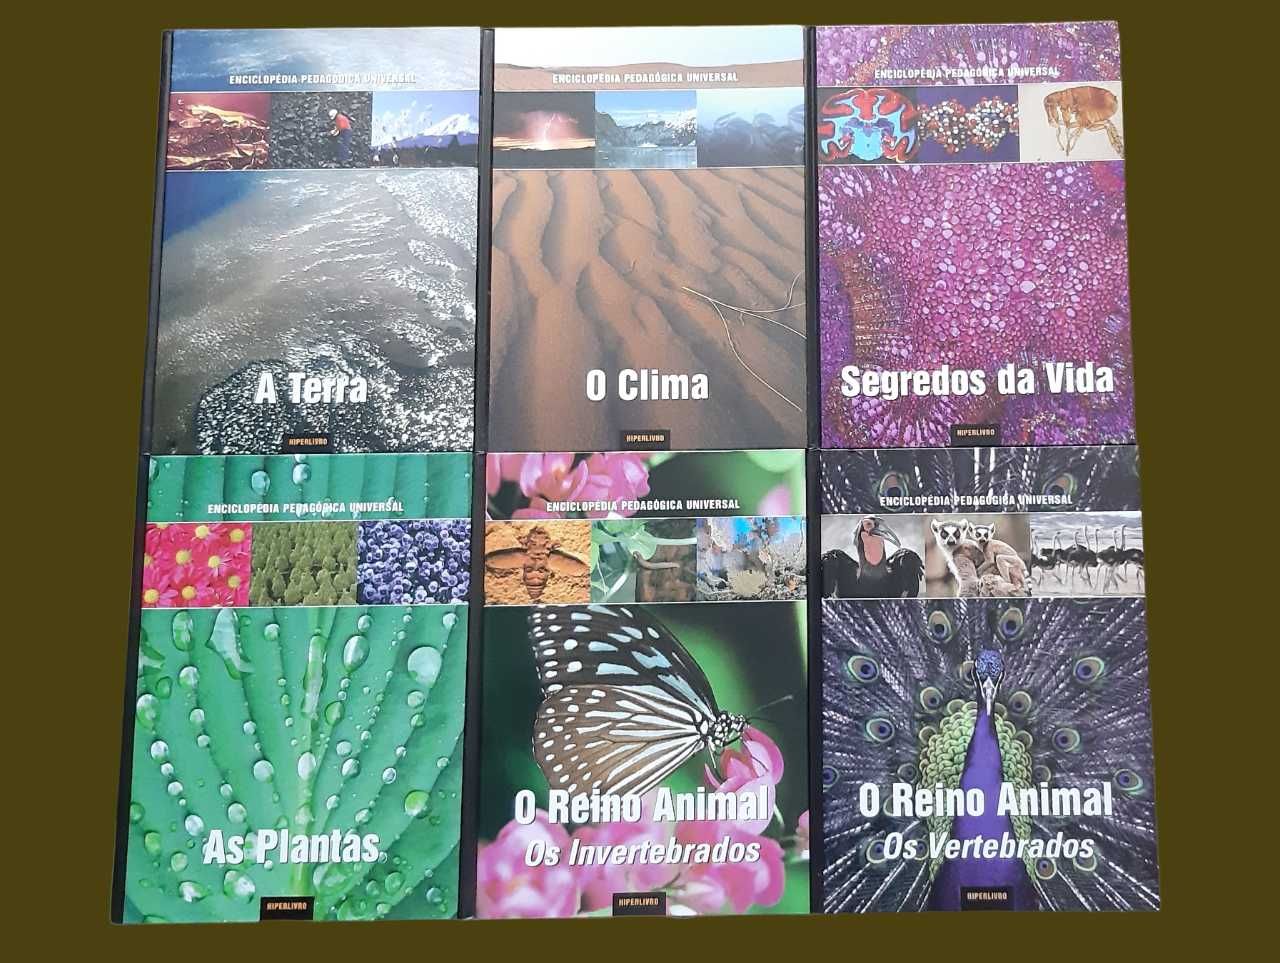 Enciclopédia Pedagógica Universal composta por 24 volumes